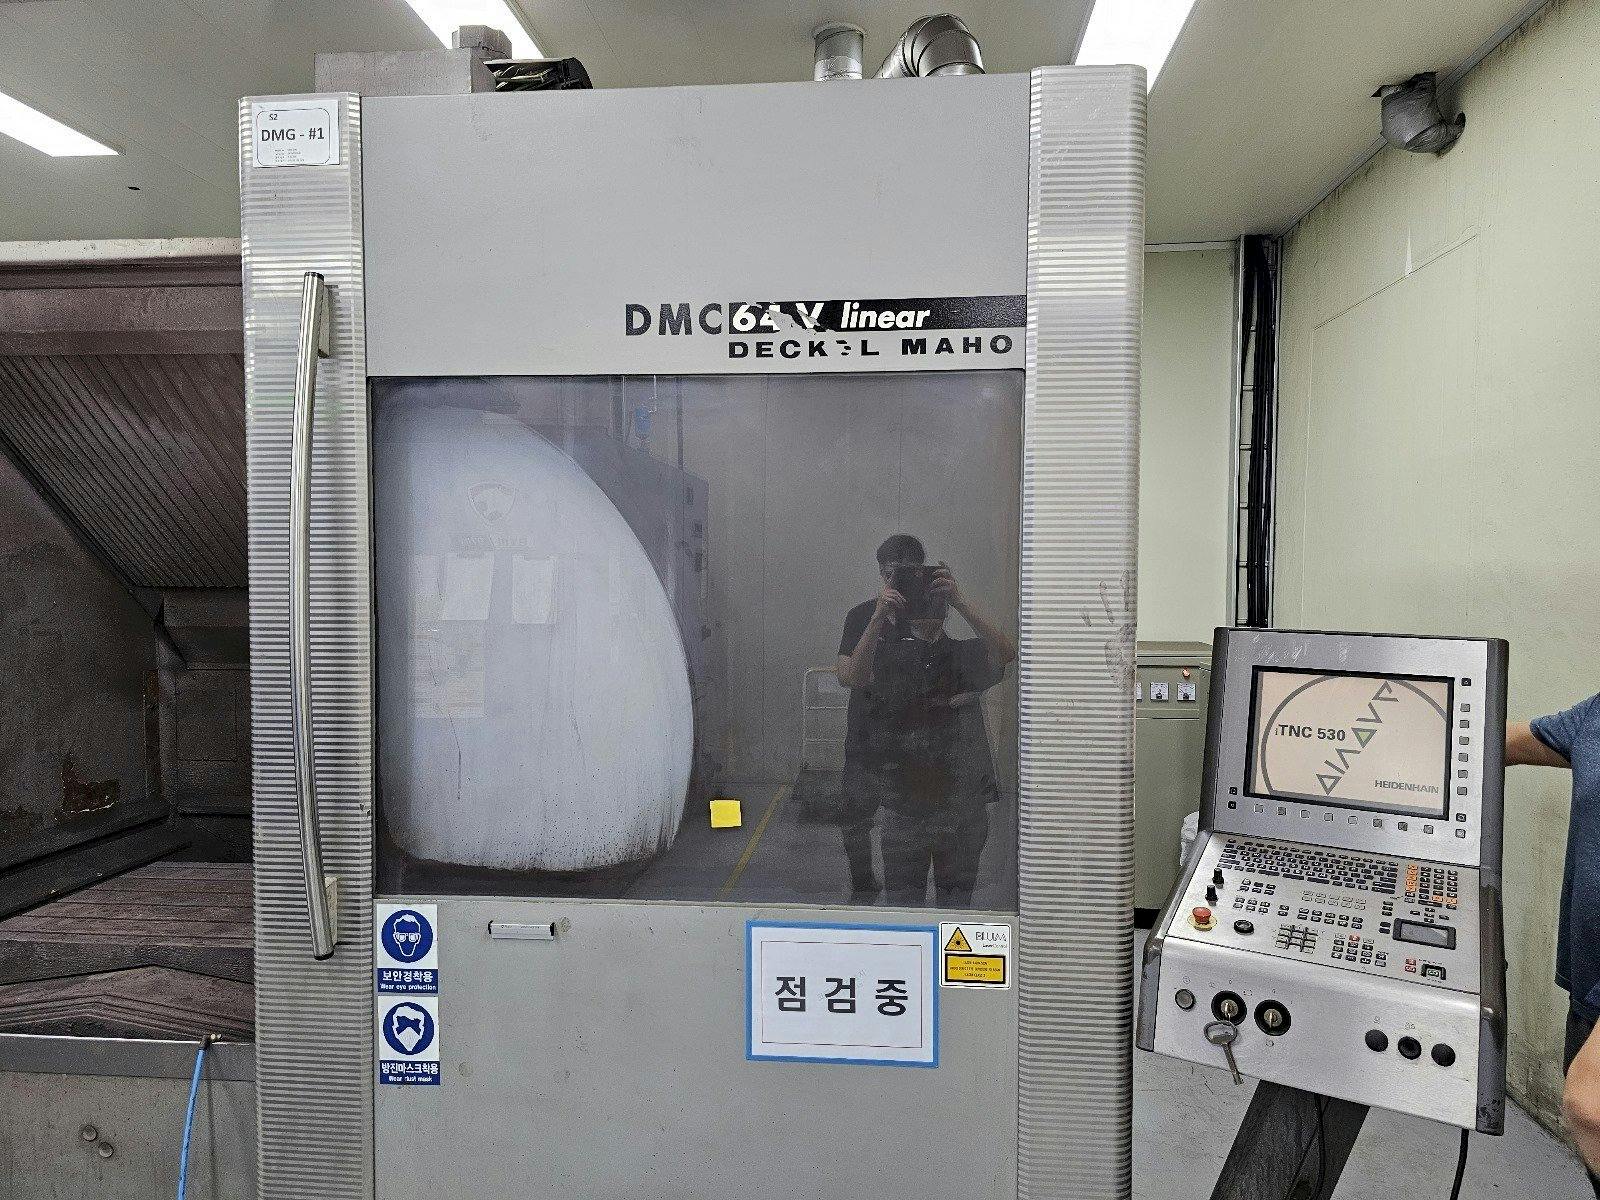 Vue de face de la machine DECKEL MAHO DMC 64V linear